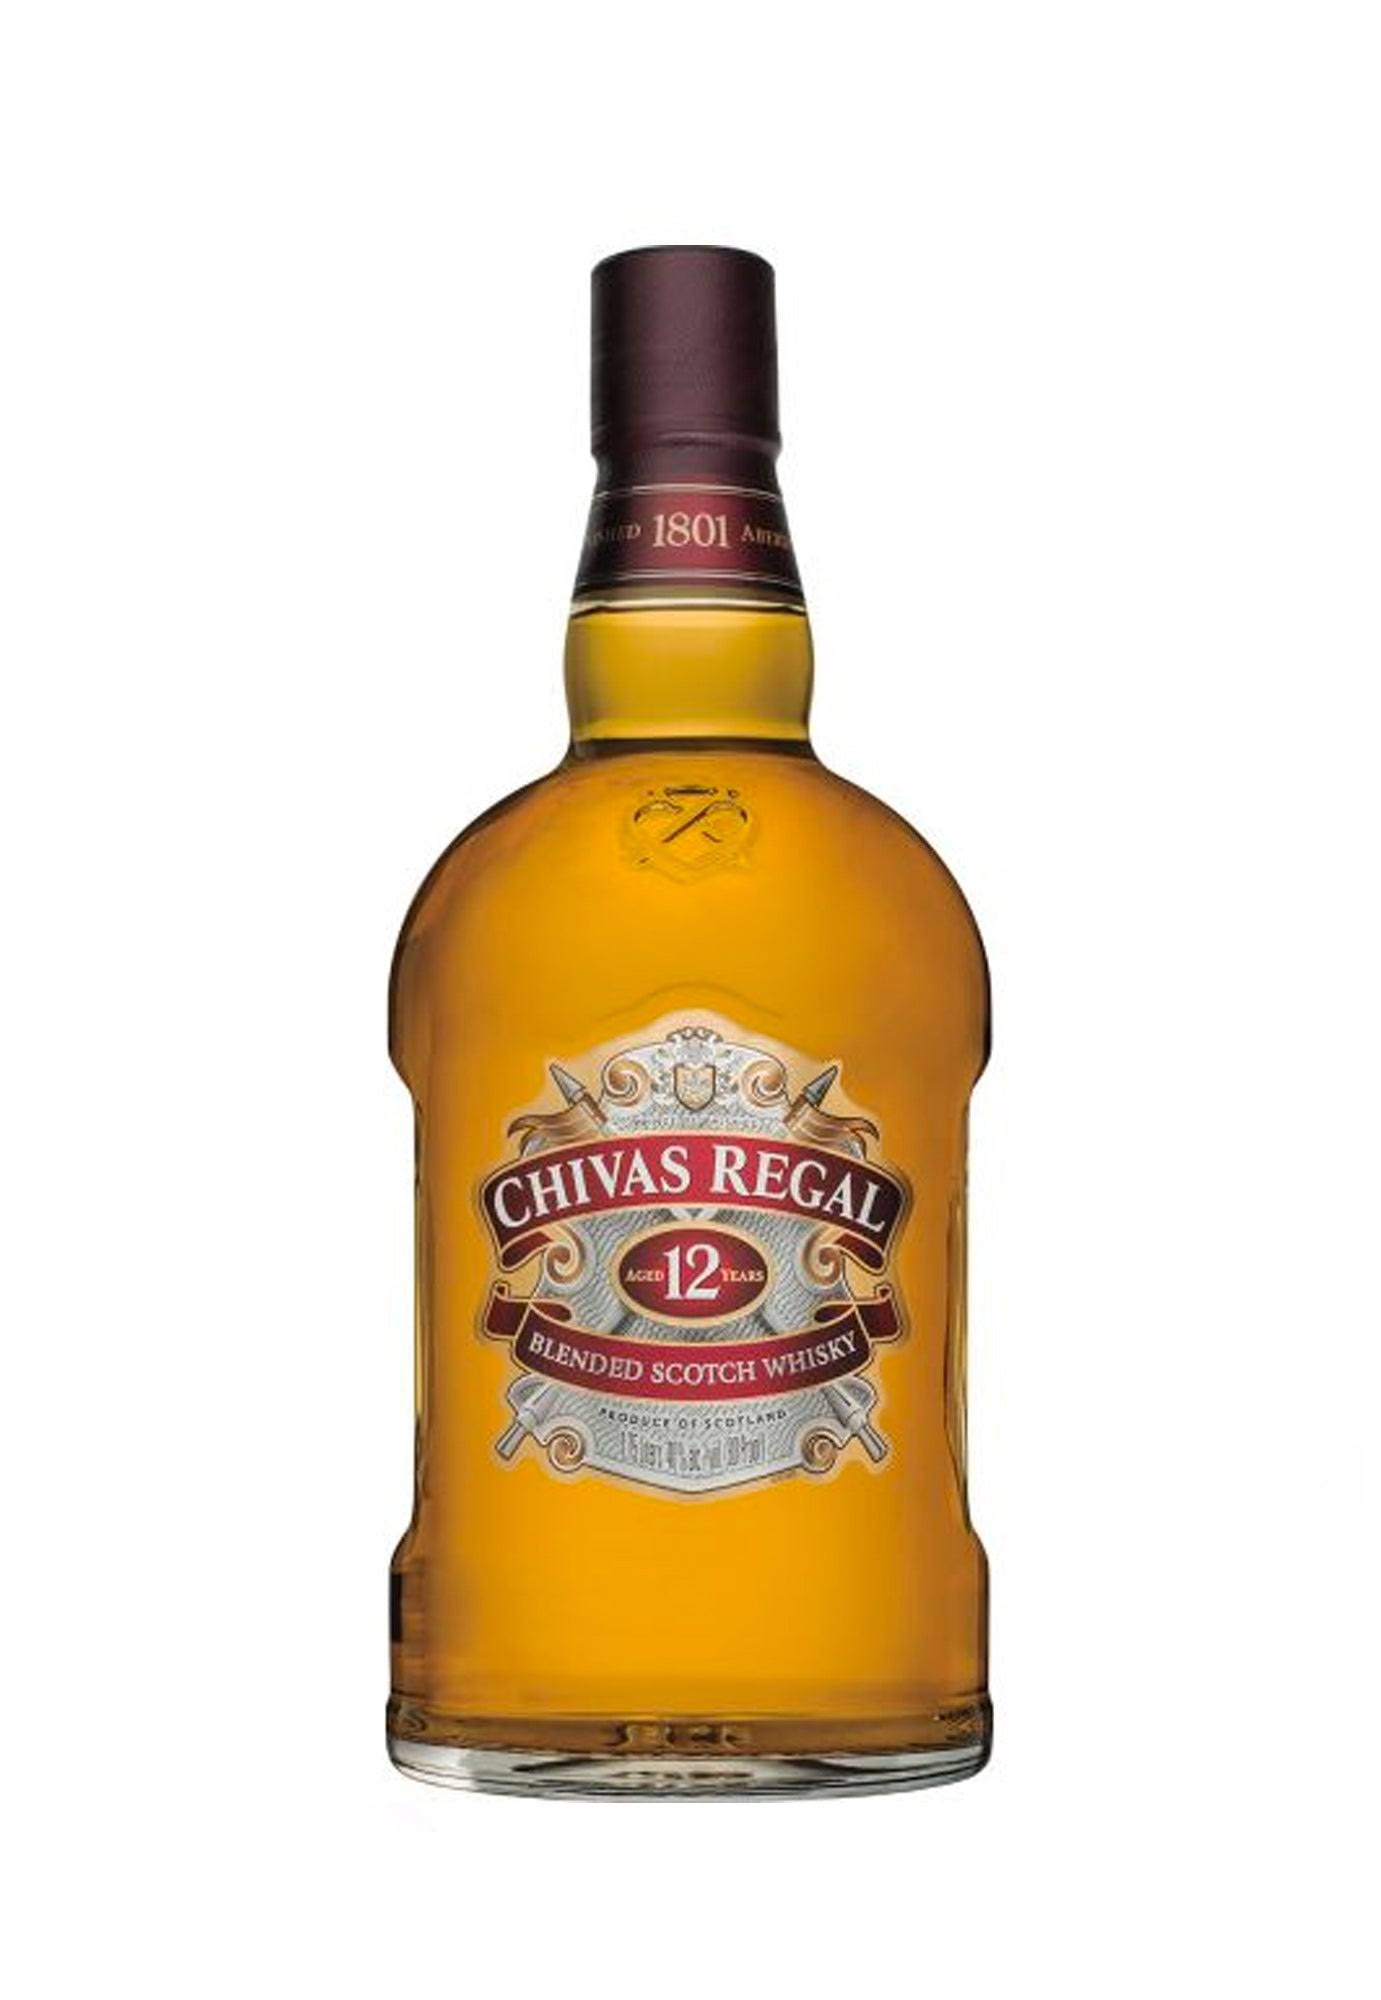 Chivas Regal Premium Blended Scotch Whisky